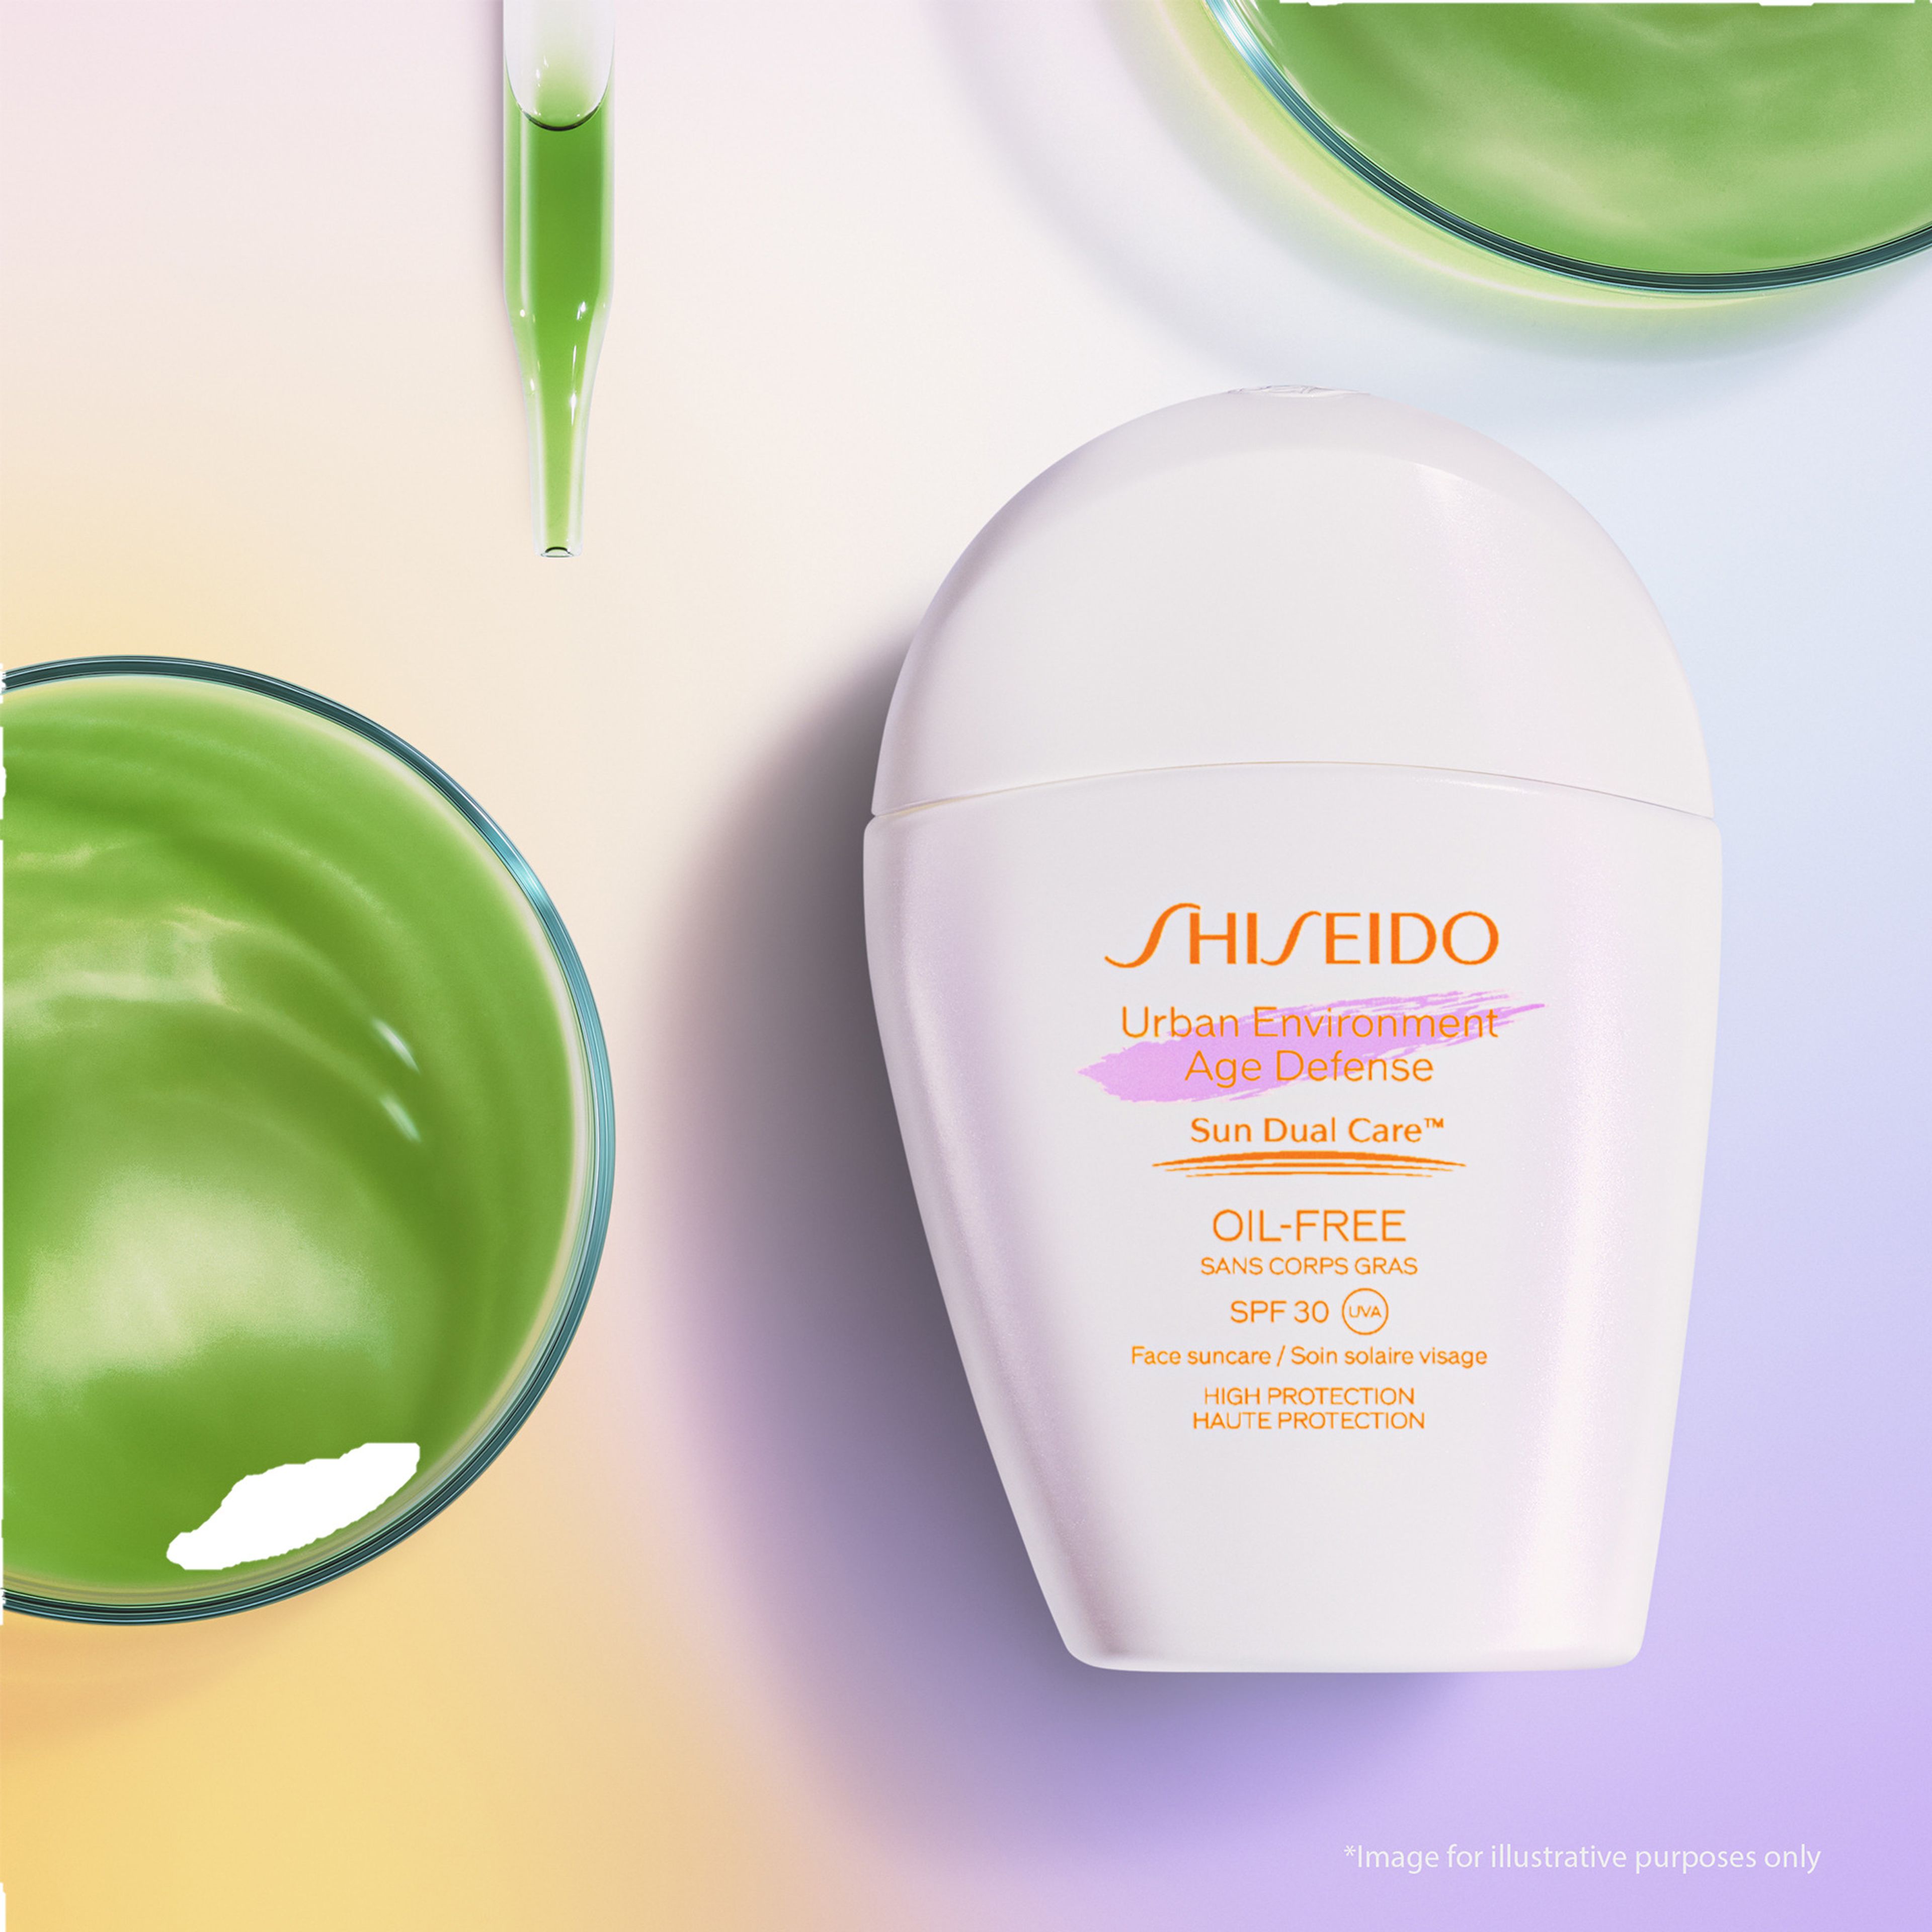 Urban Environment Age Defense Oil-free Spf 30 Shiseido 4